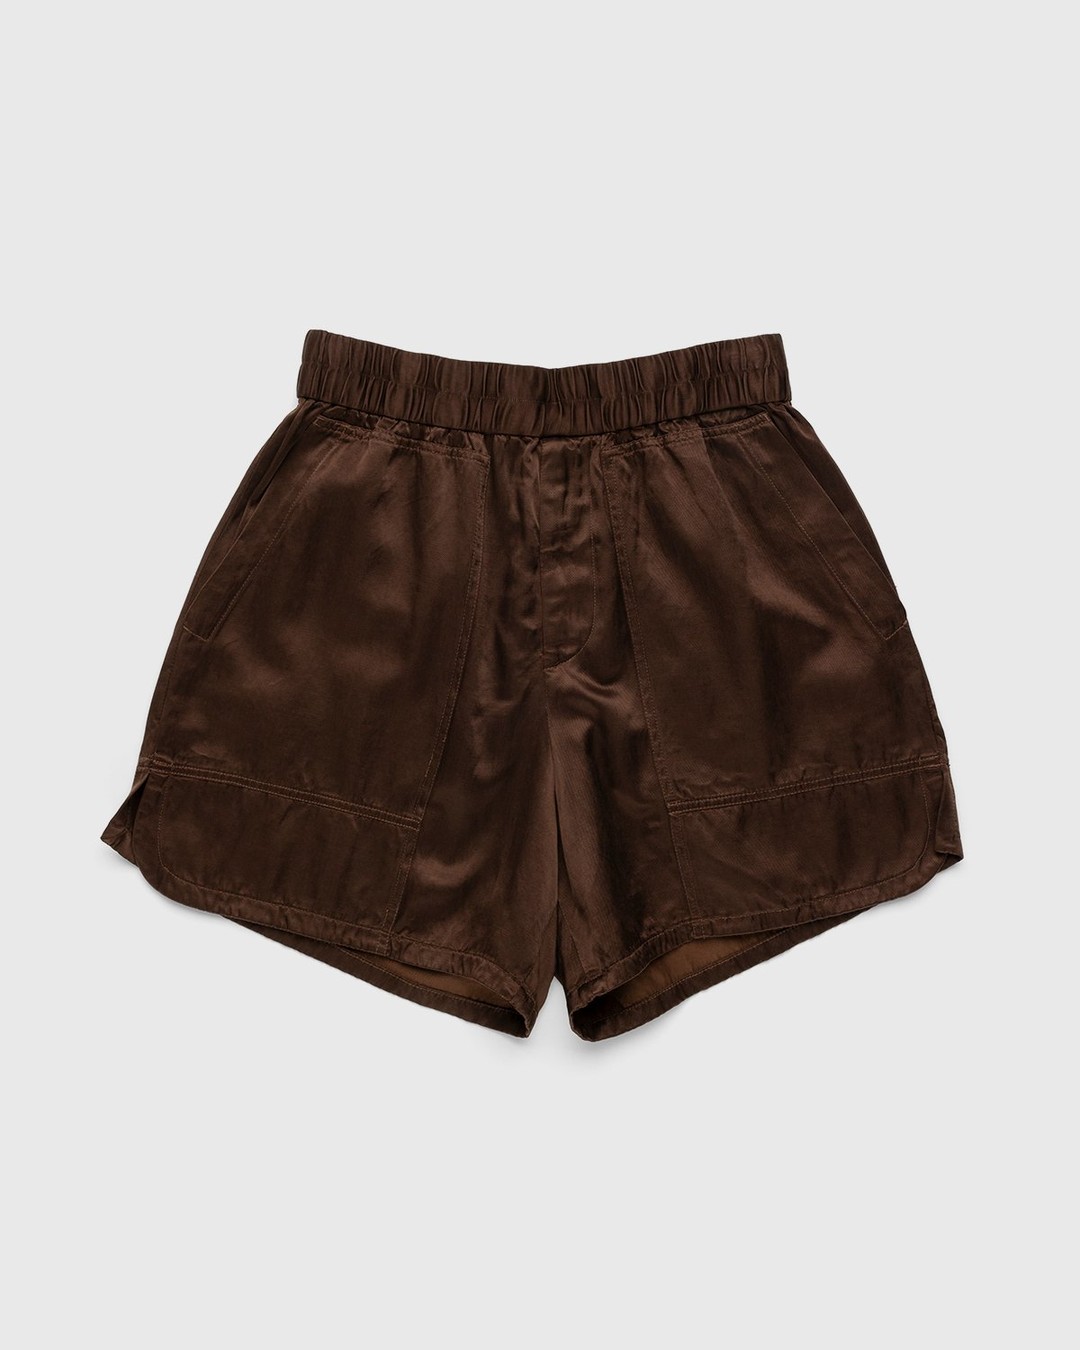 Dries van Noten – Pooles Shorts Brown - Swim Shorts - Brown - Image 1